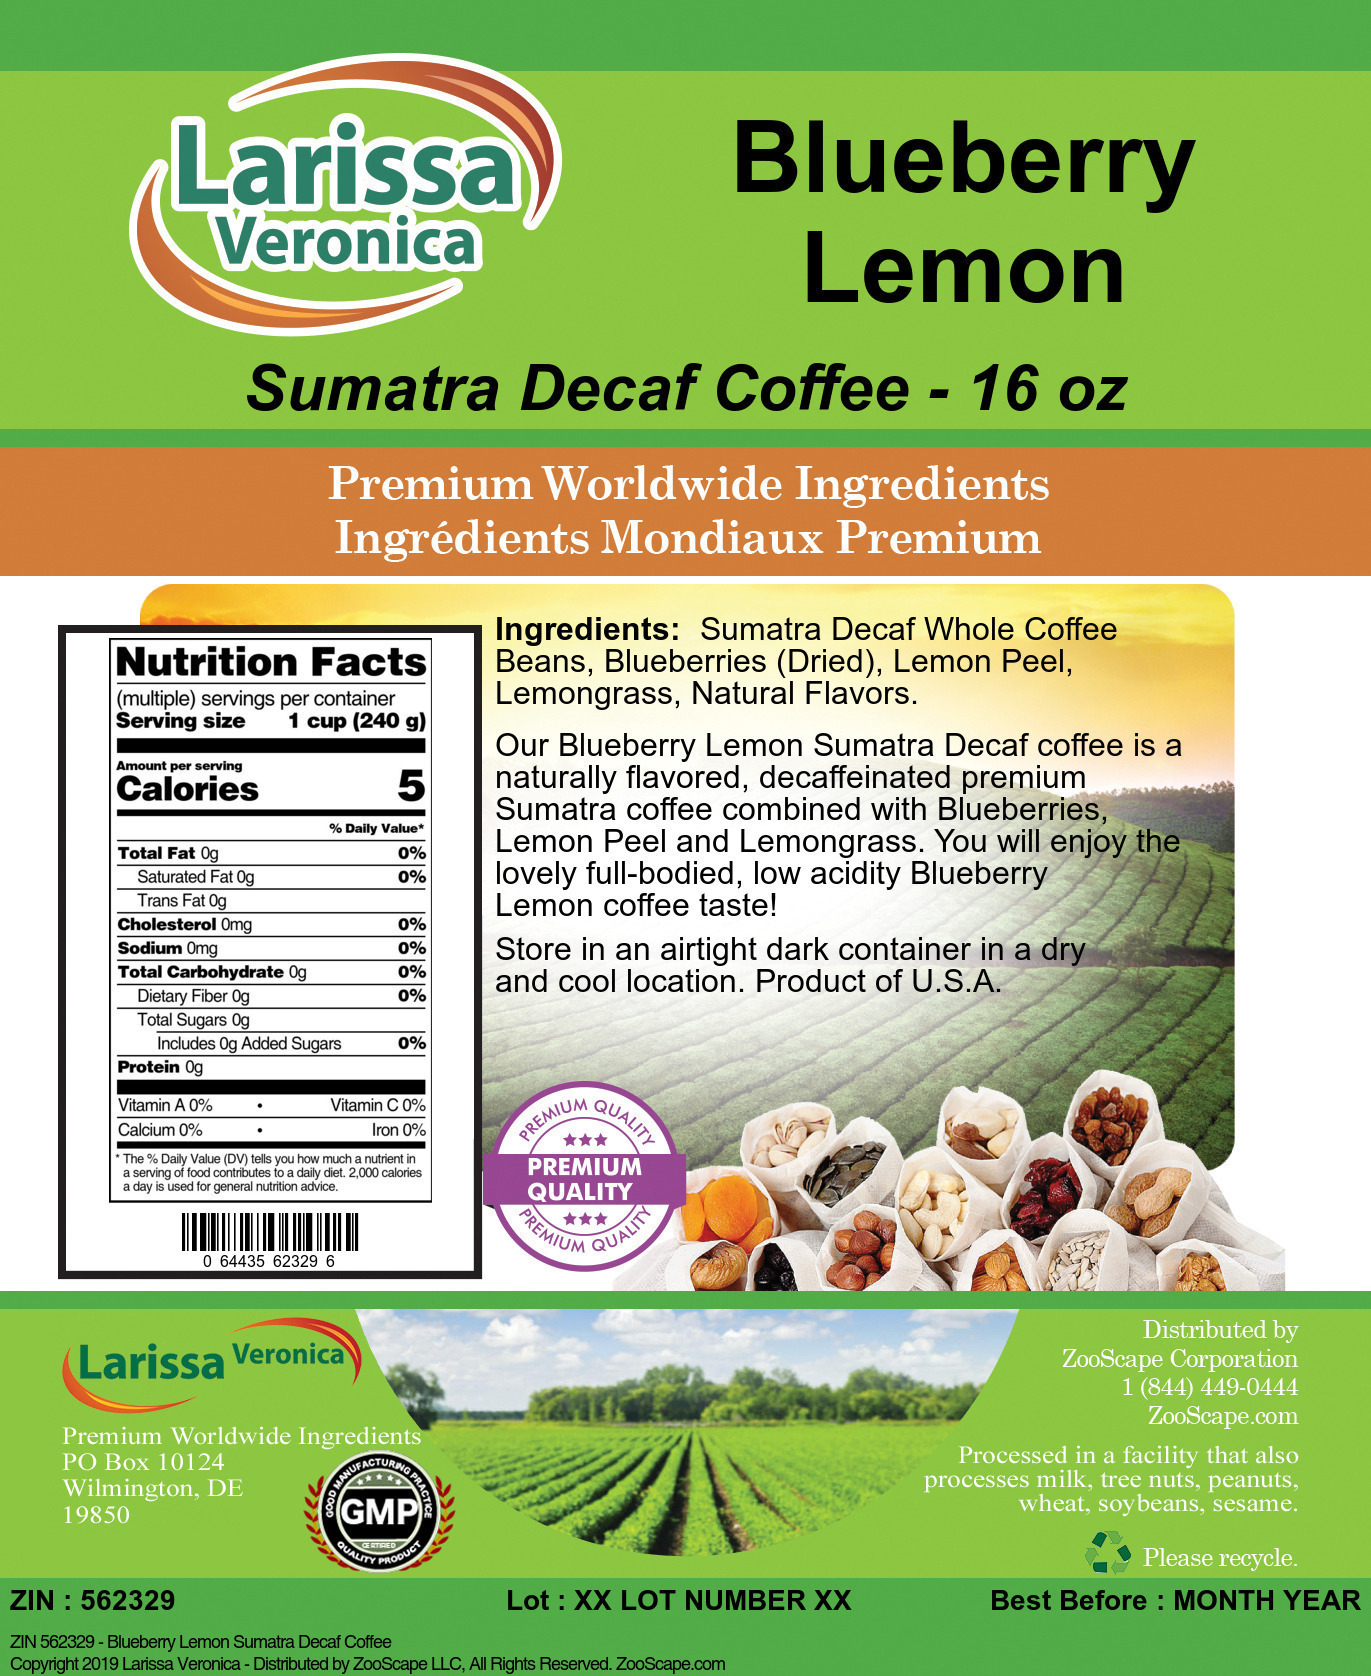 Blueberry Lemon Sumatra Decaf Coffee - Label